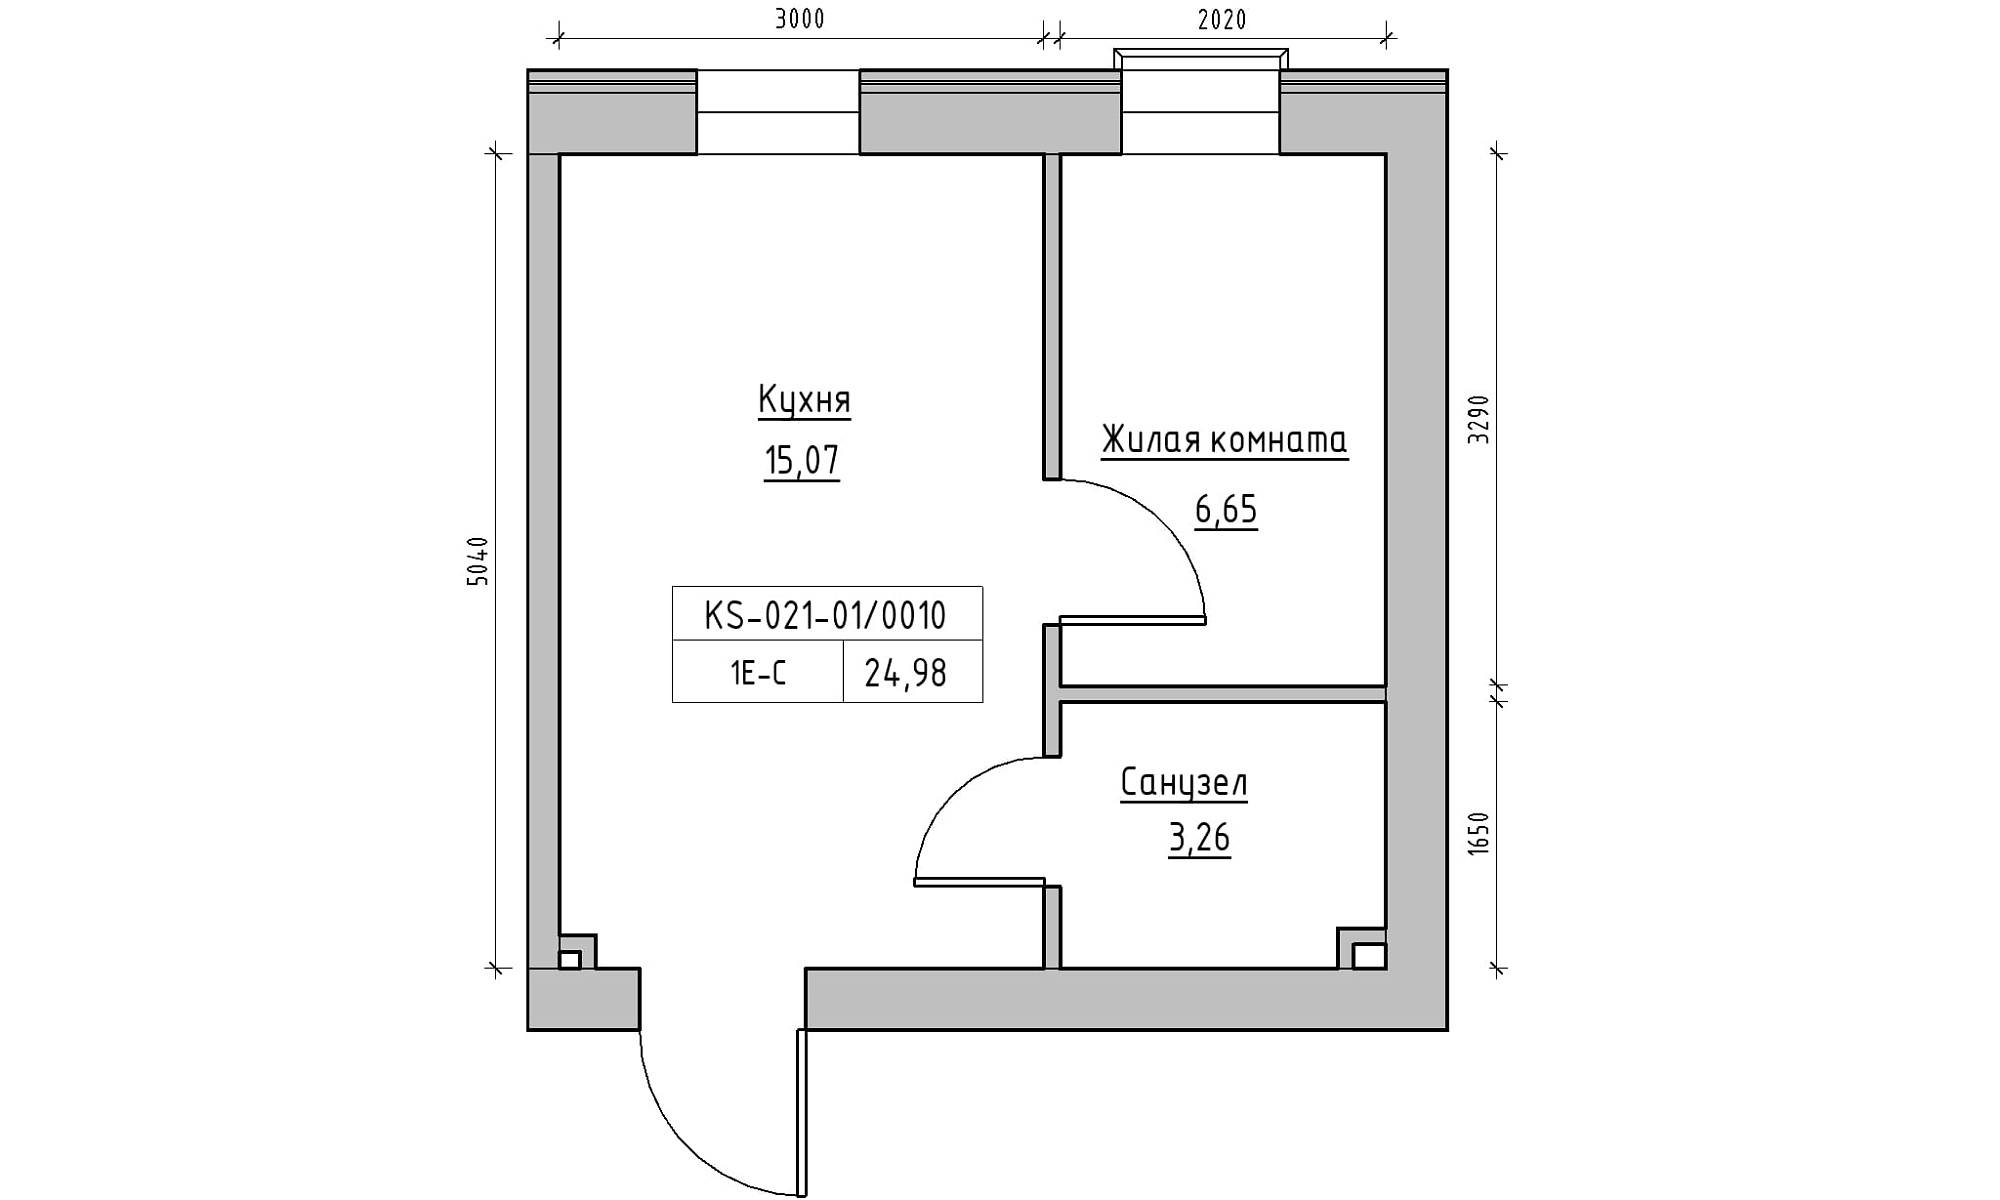 Planning 1-rm flats area 24.98m2, KS-021-01/0010.